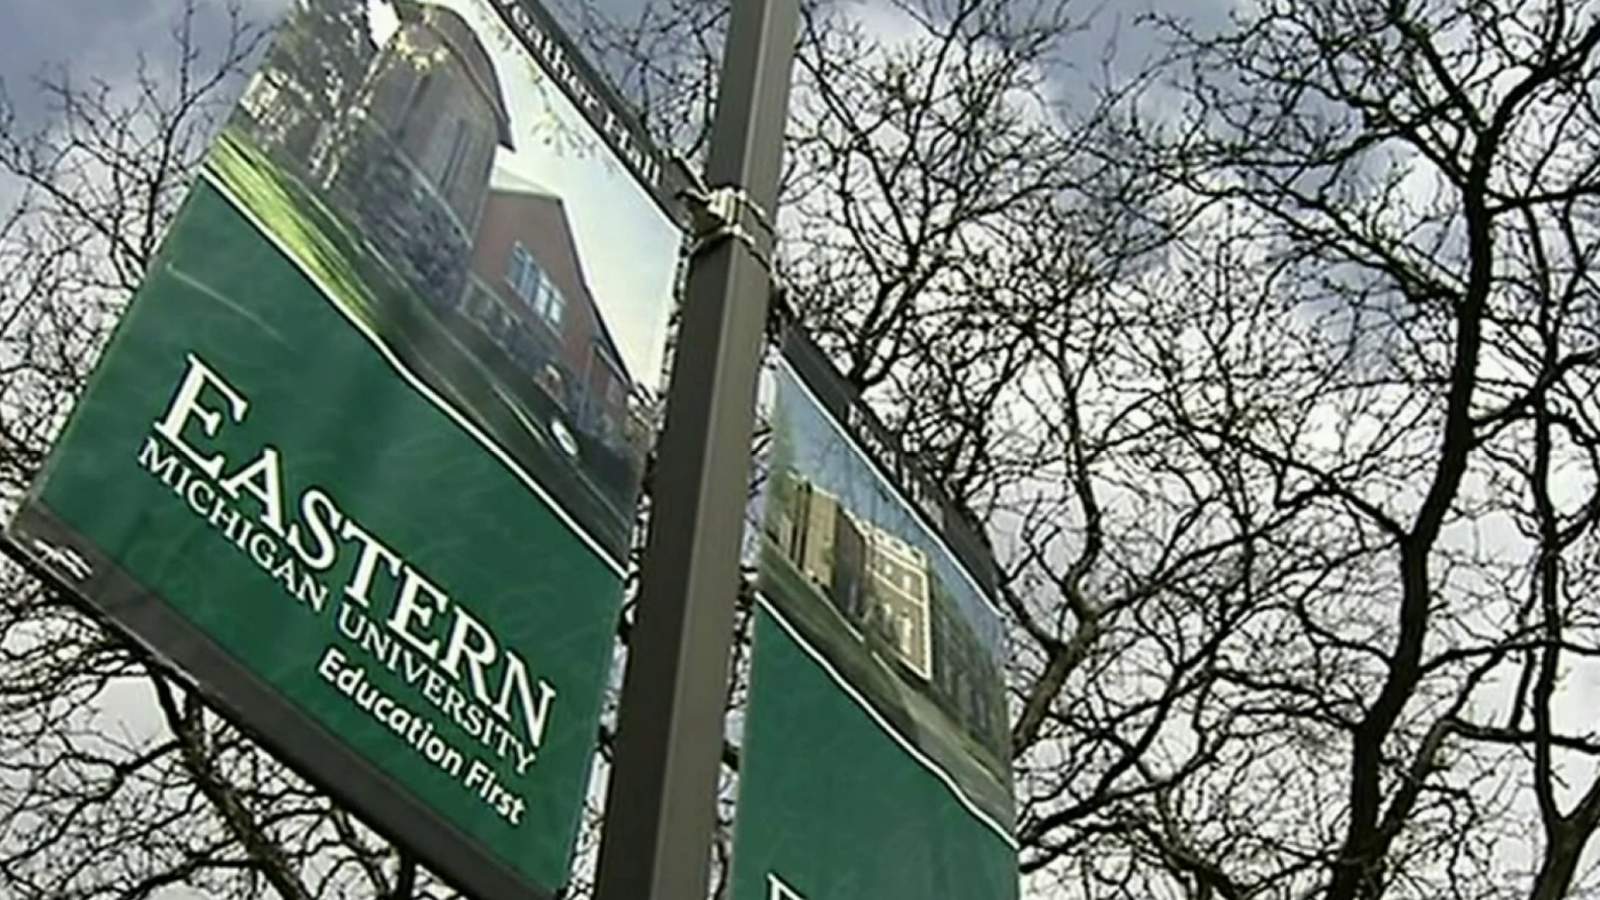 Former Eastern Michigan University student files lawsuit against professor alleging sexual harassment